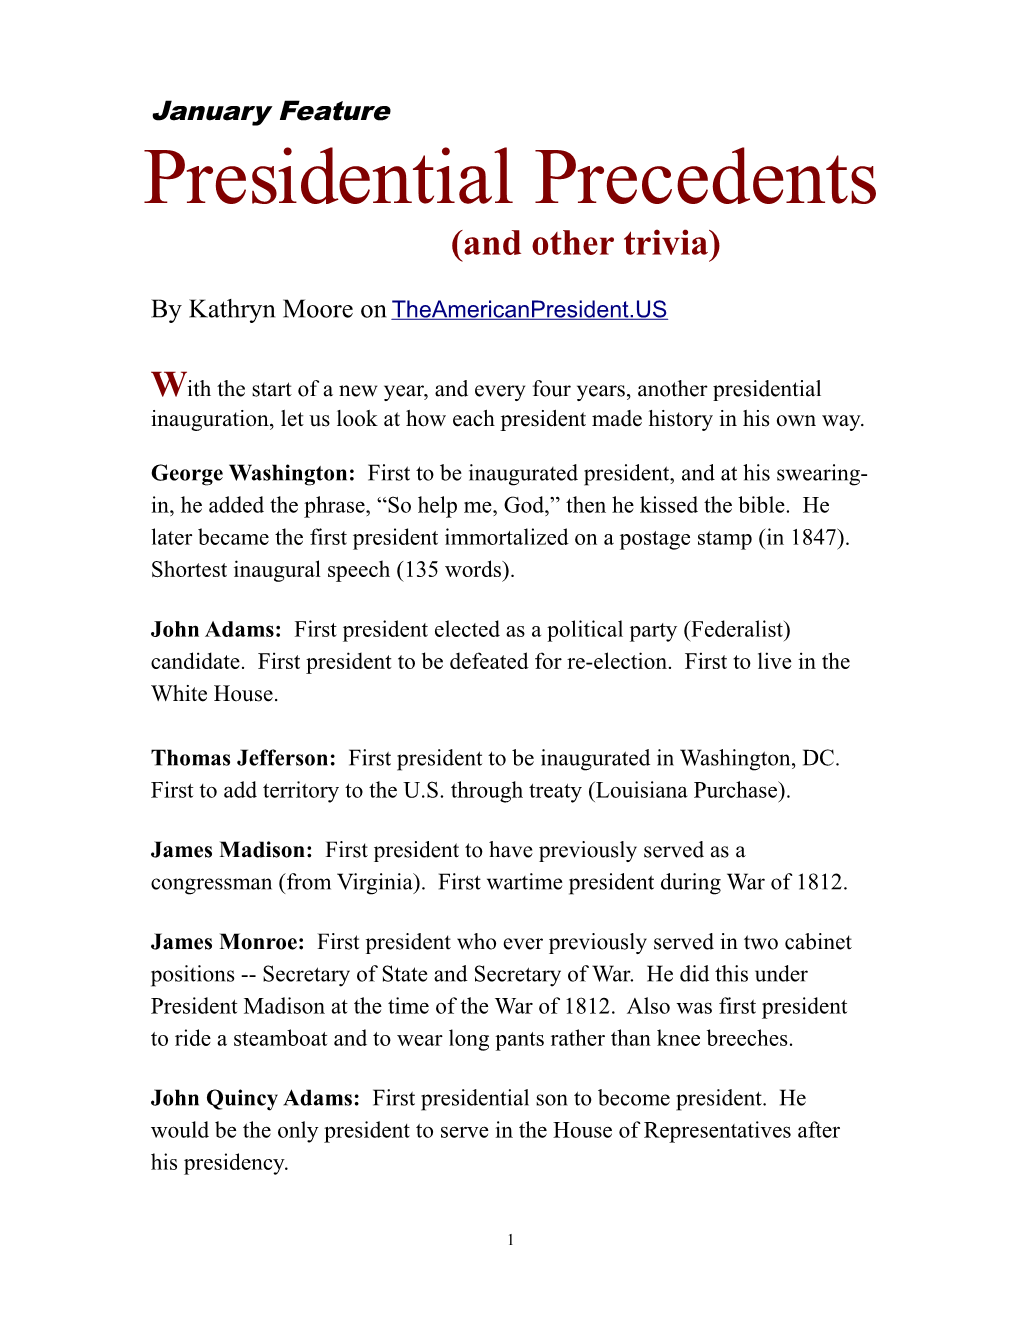 Presidential Precedents